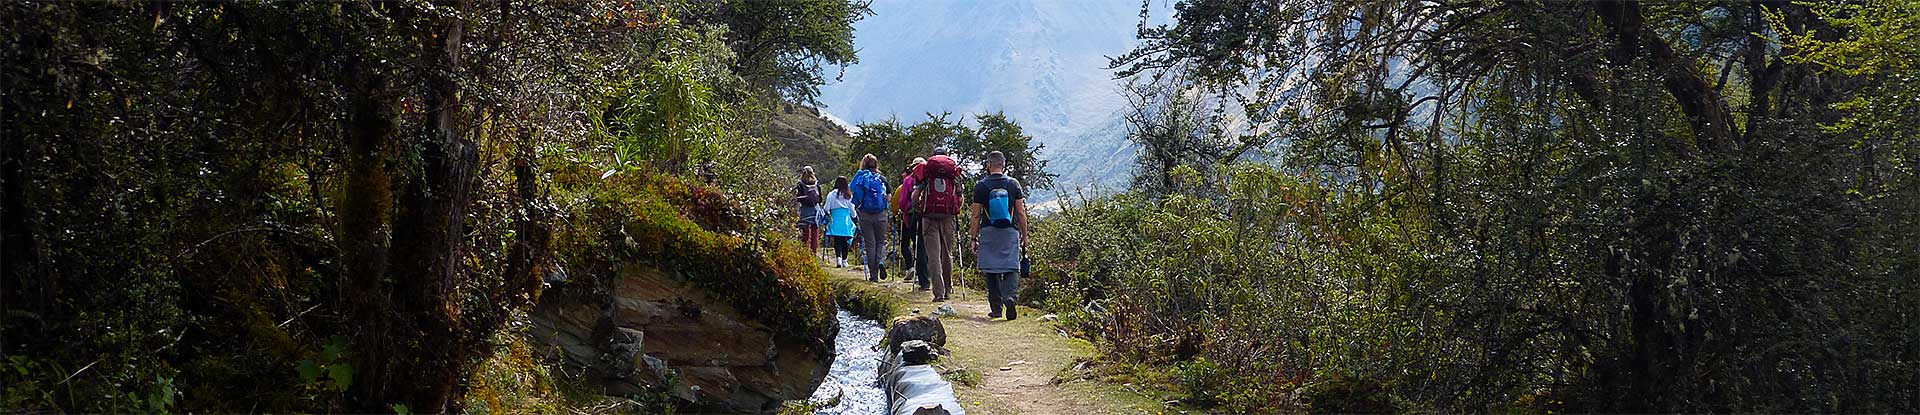 cusco day hikes